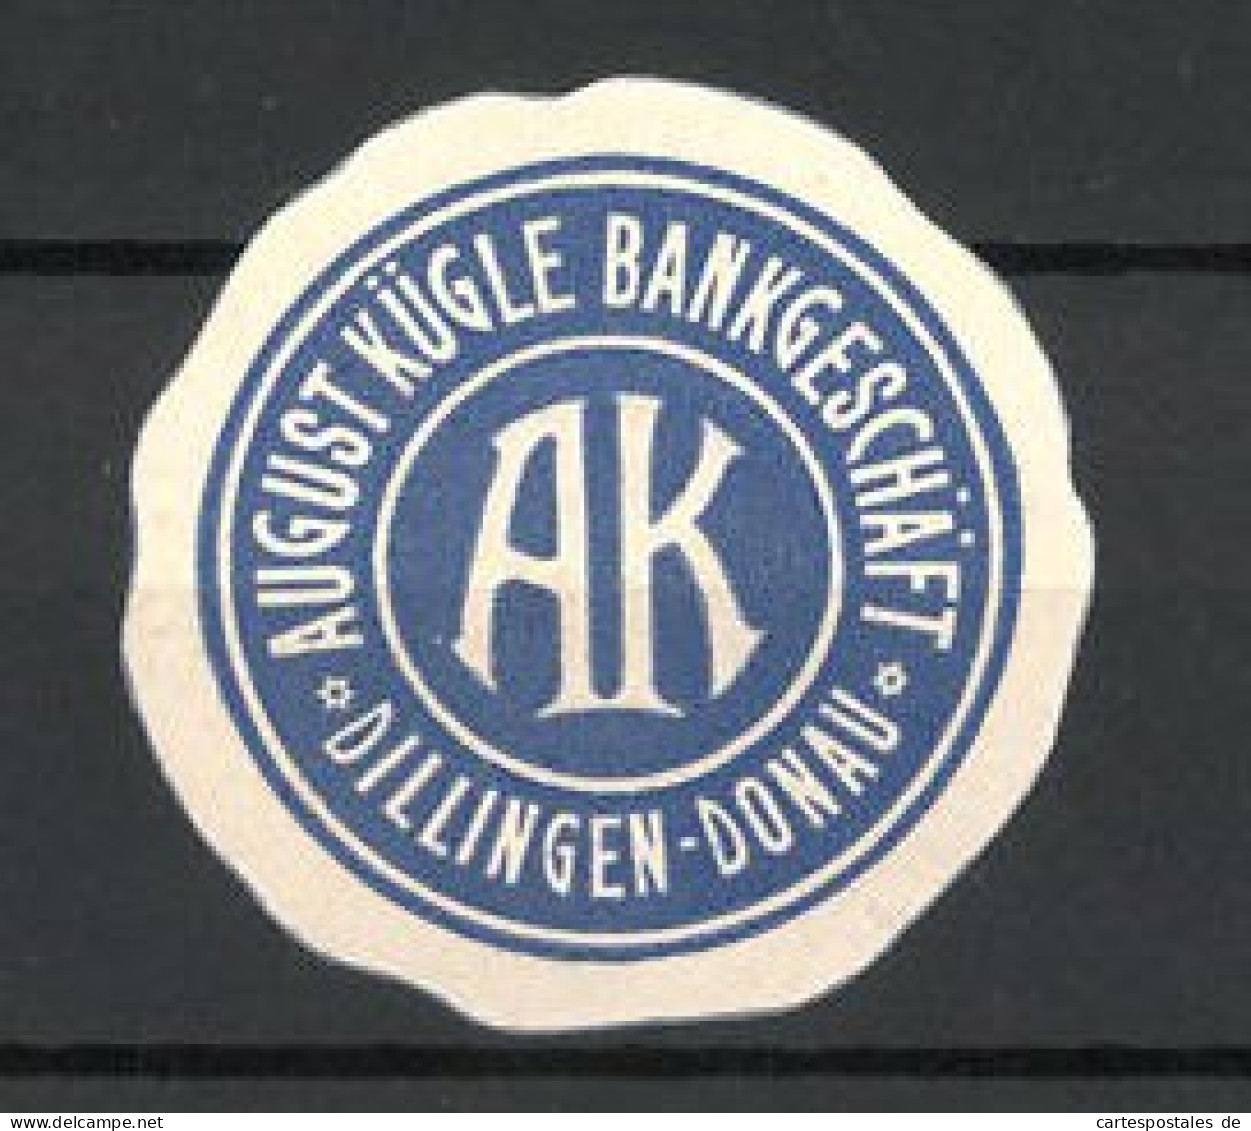 Reklamemarke August Kügle Bankgeschäft, Dillingen / Donau, Firmenlogo  - Cinderellas